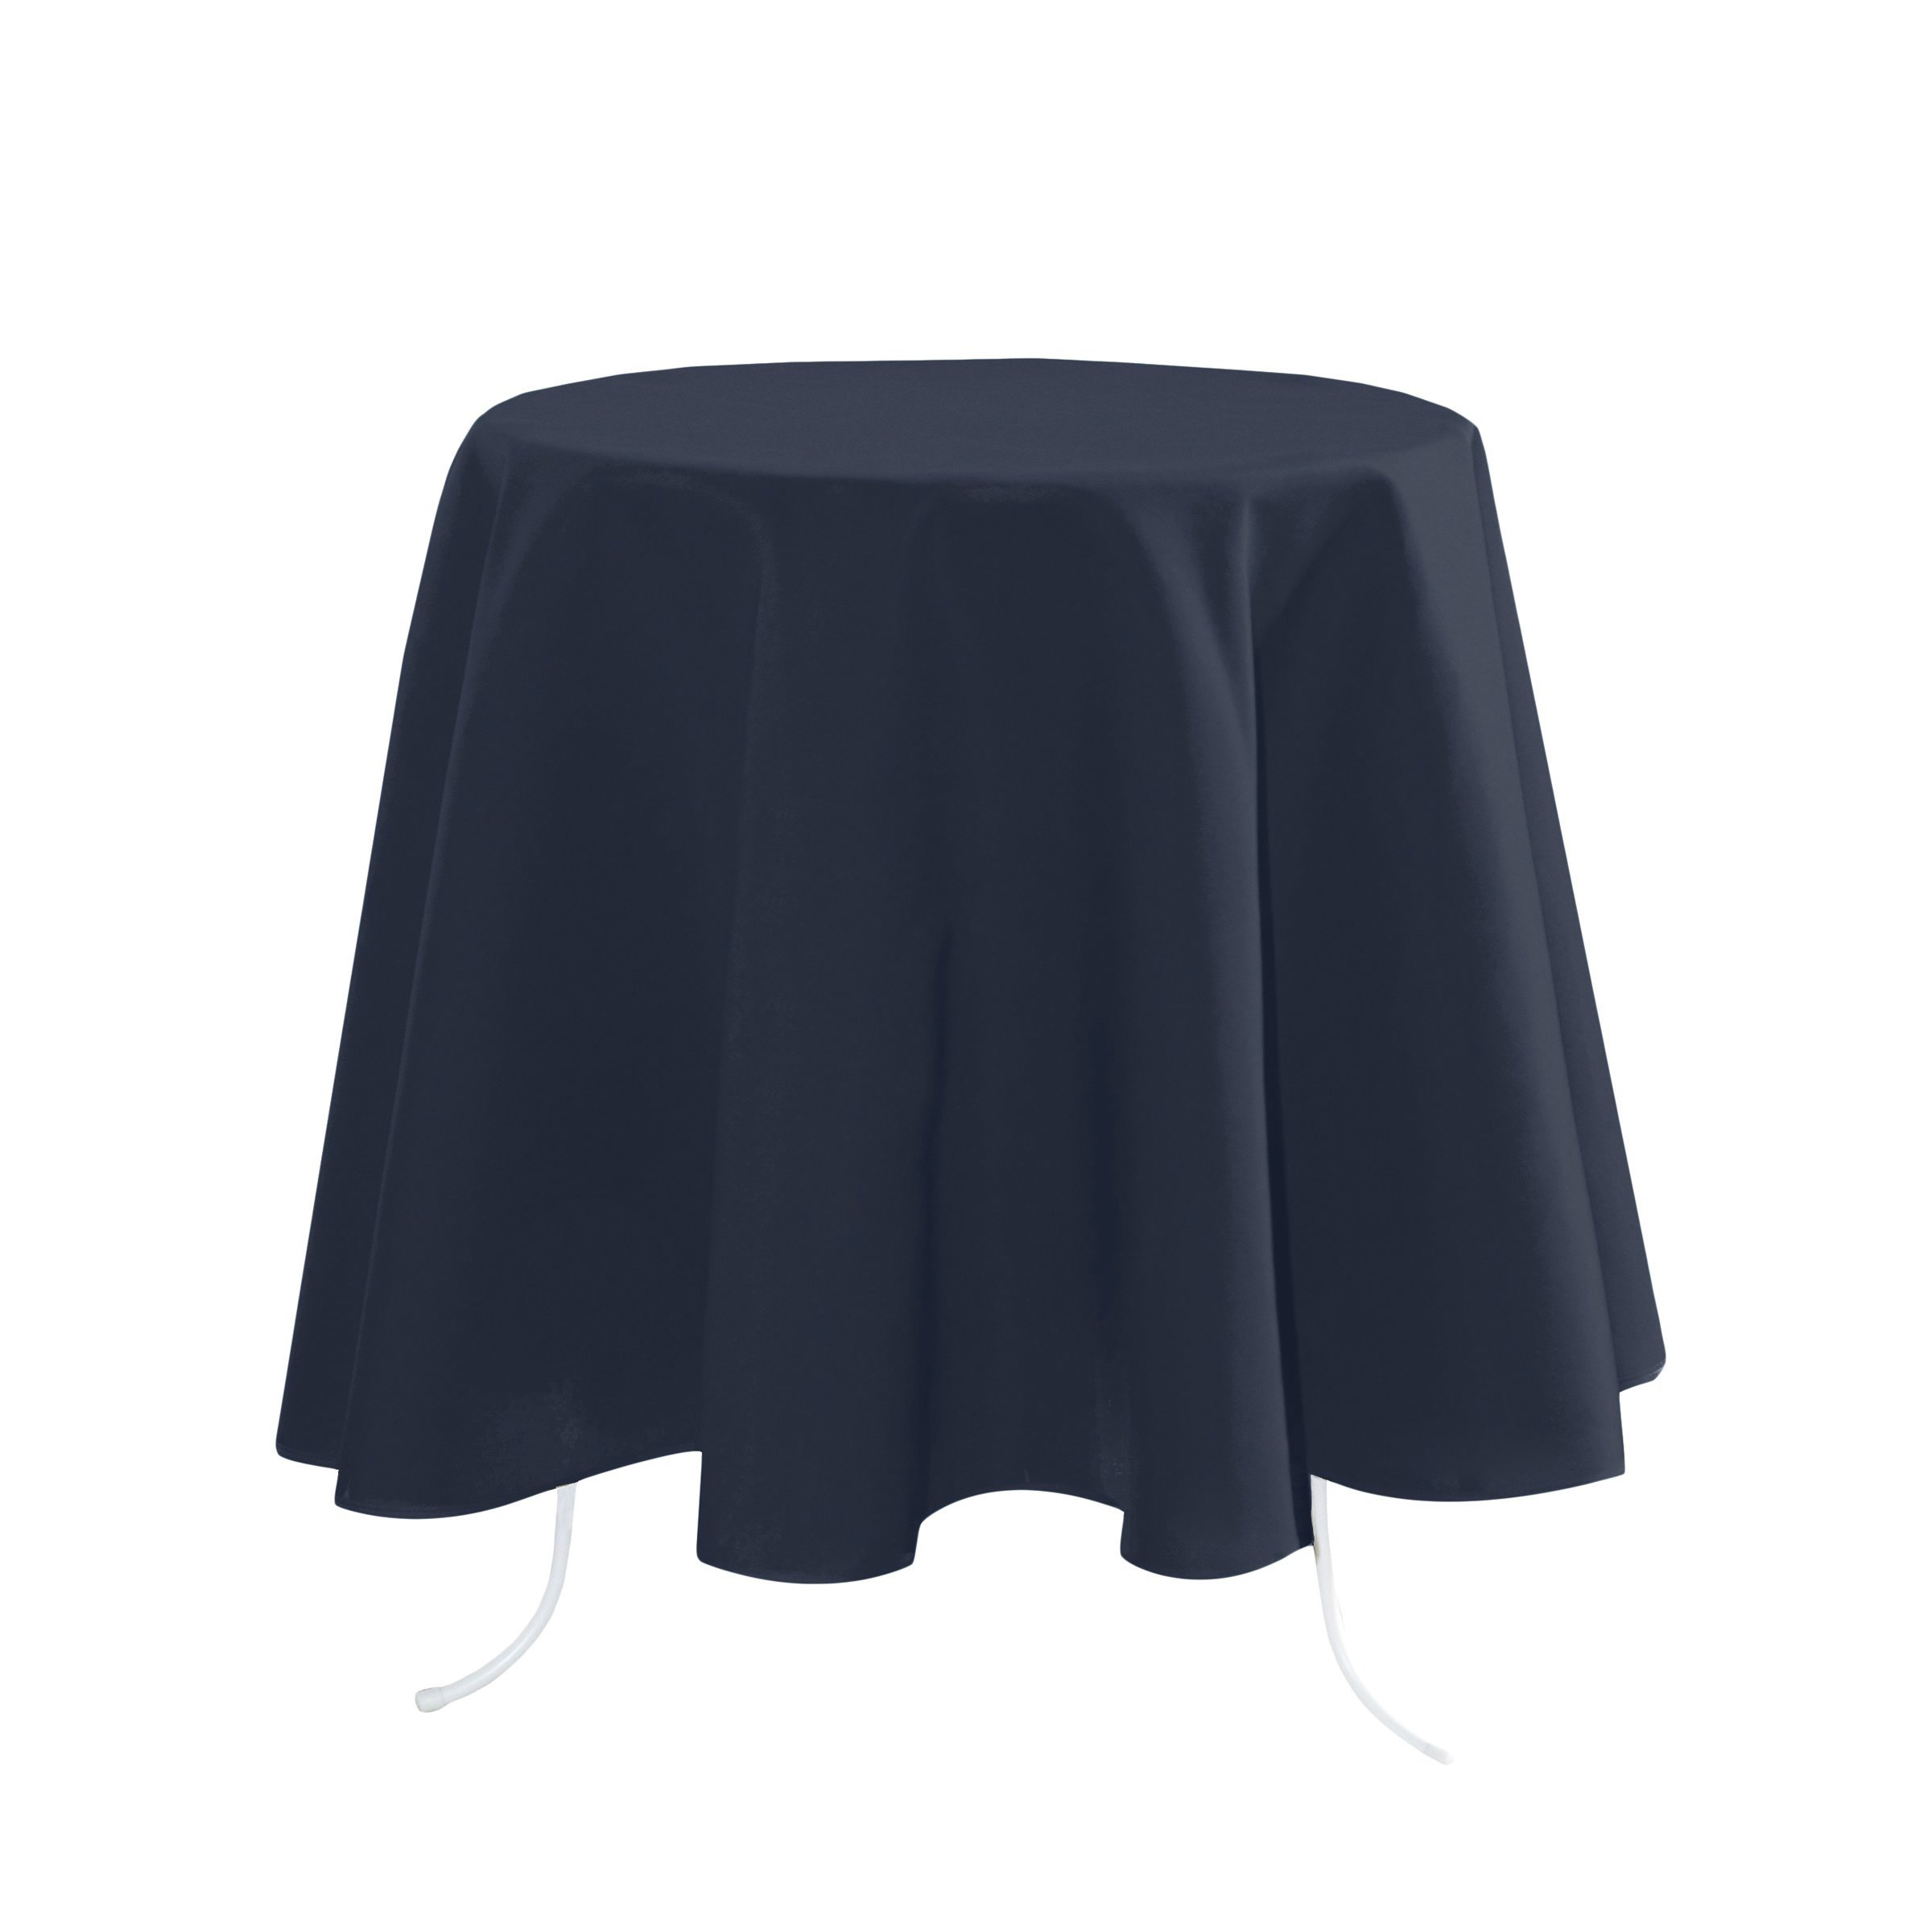 Tovaglia rotonda (180 cm) Nelson Blu marino - Biancheria tavola e cucina -  Eminza